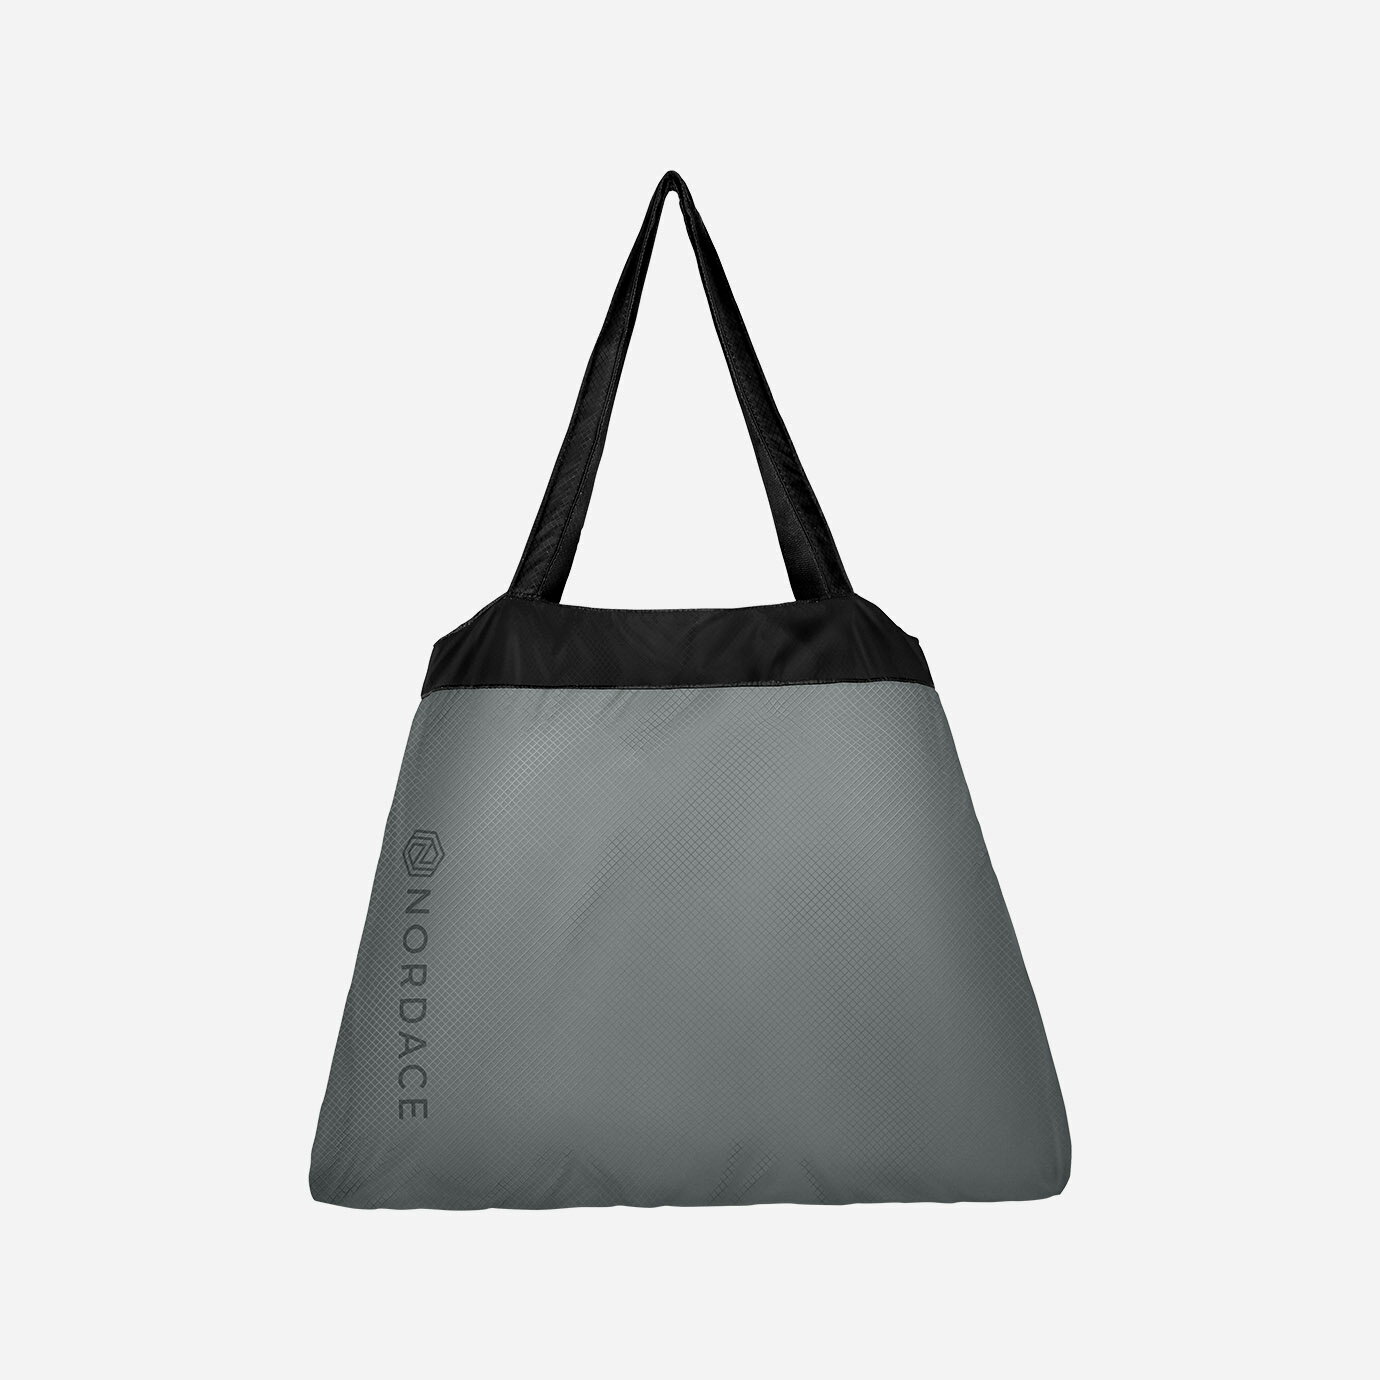 Nordace可折疊購物袋 隨身攜帶 防水 環保 輕便 大容量 -灰色